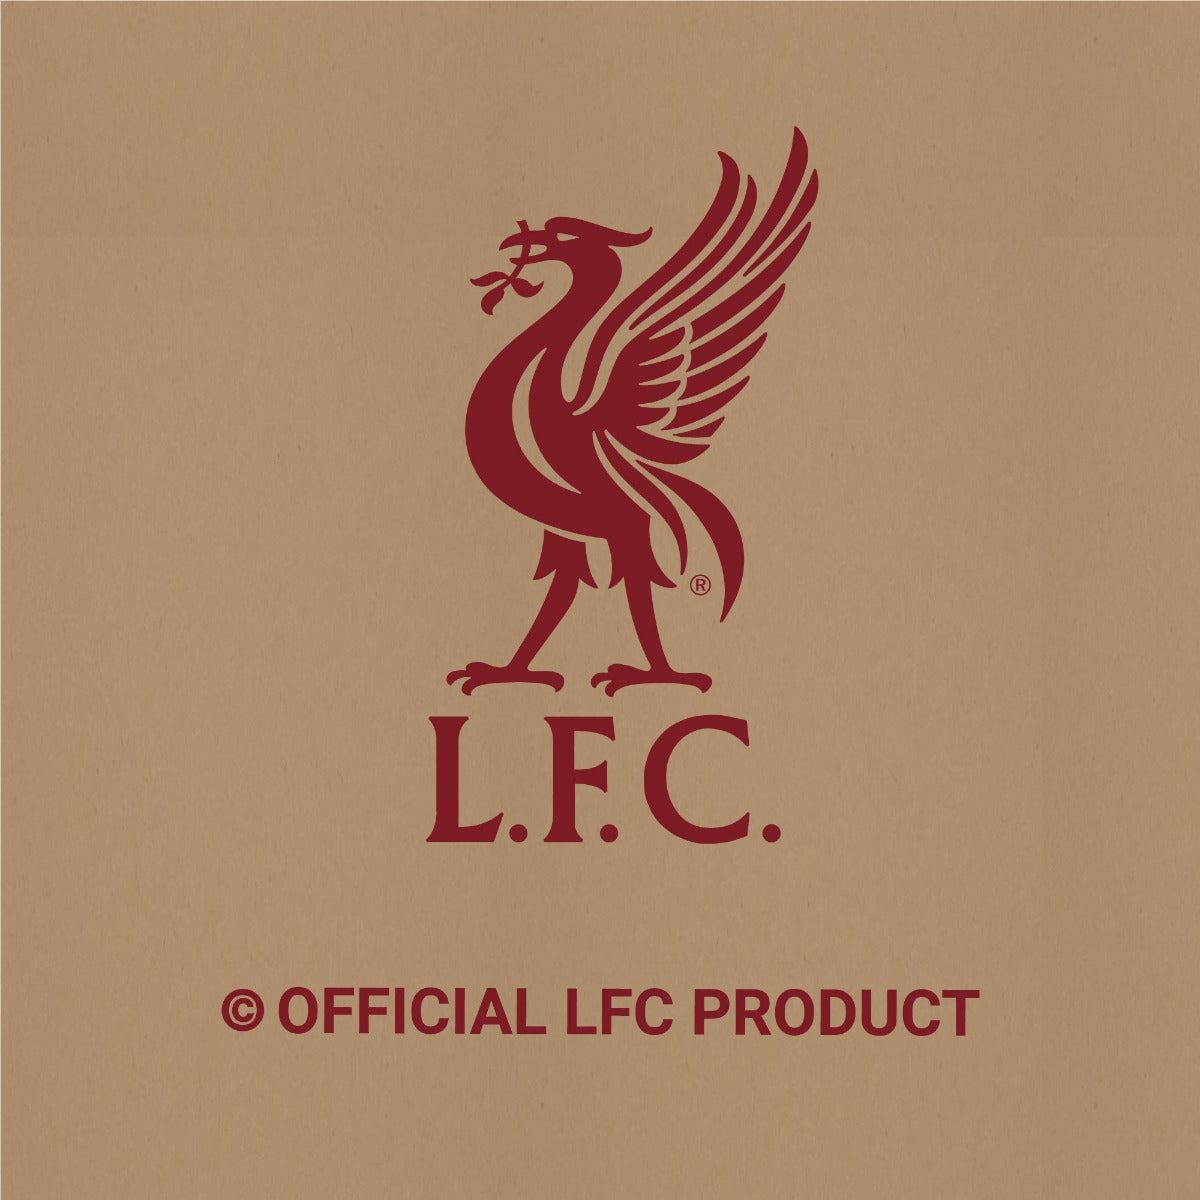 Liverpool FC Print - Kop End Stadium Stats Poster